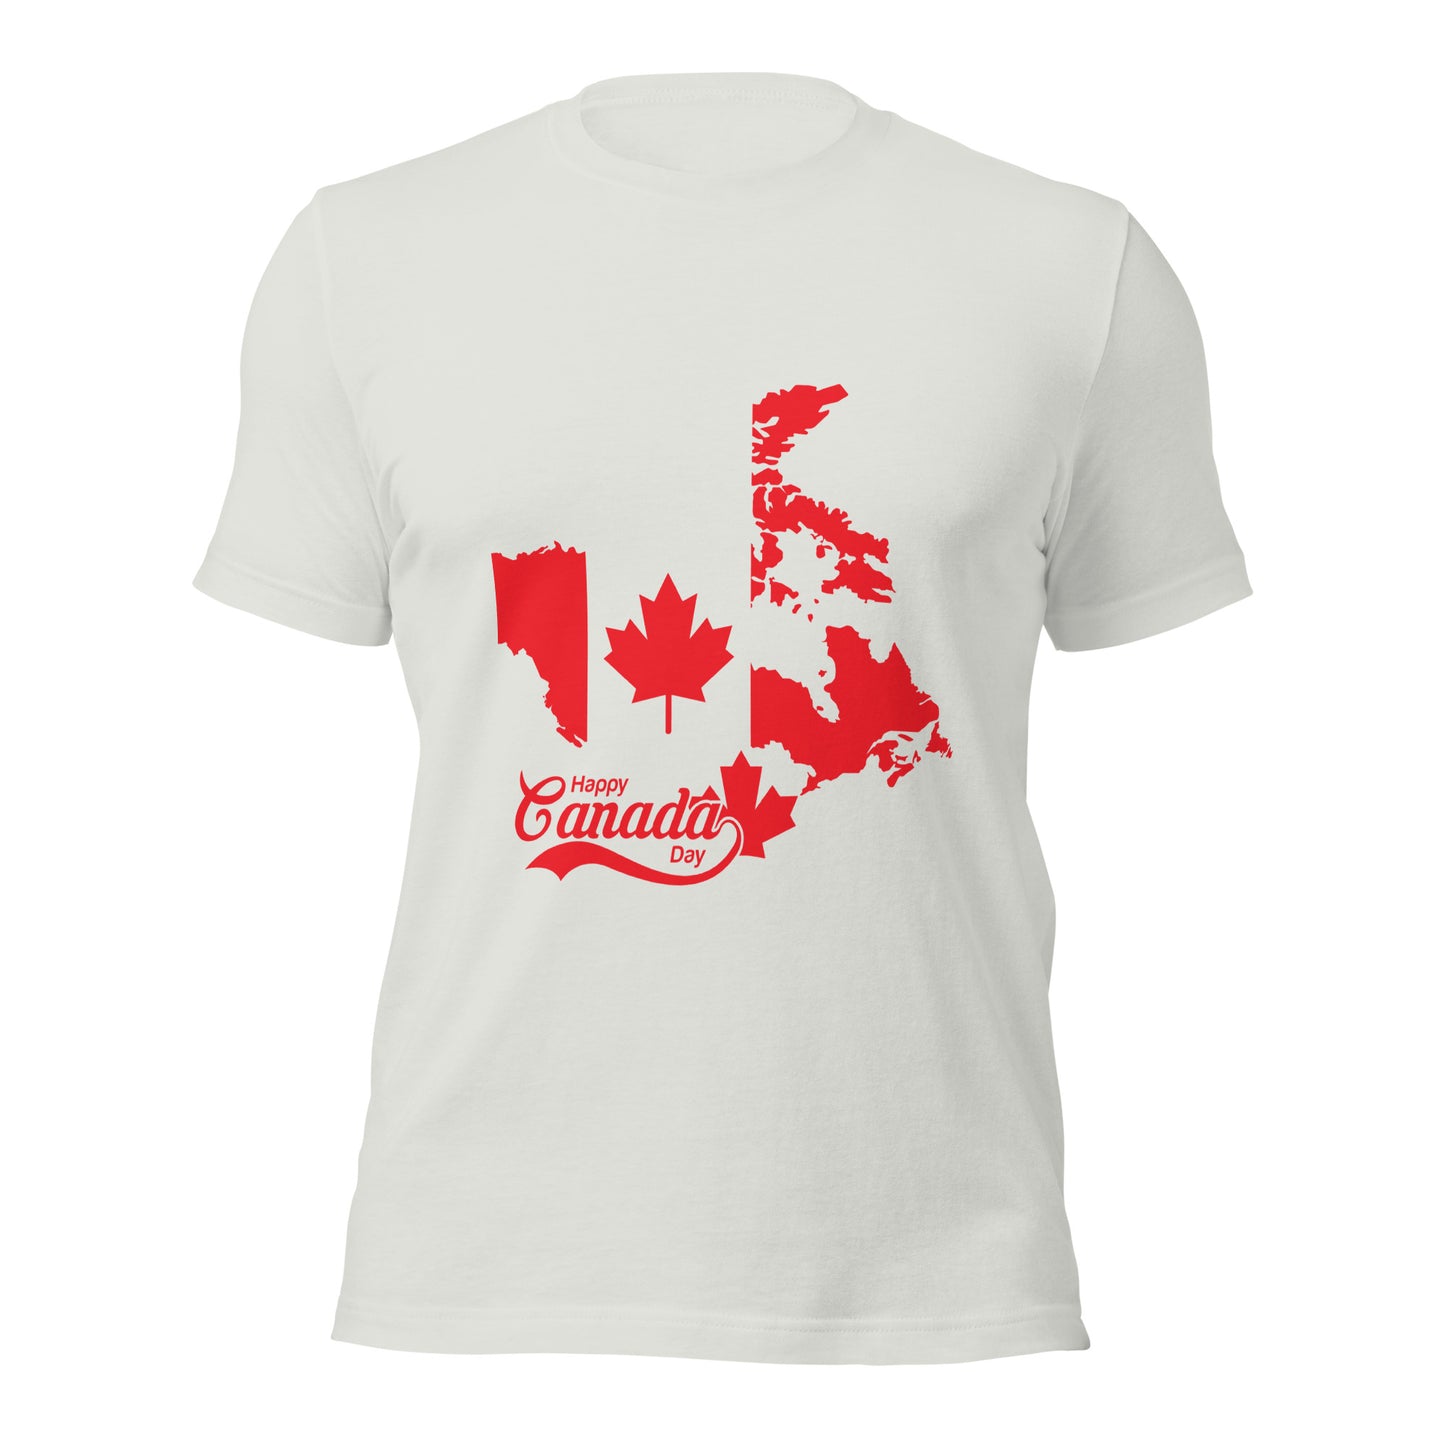 Happy Canada Day Unisex t-shirt